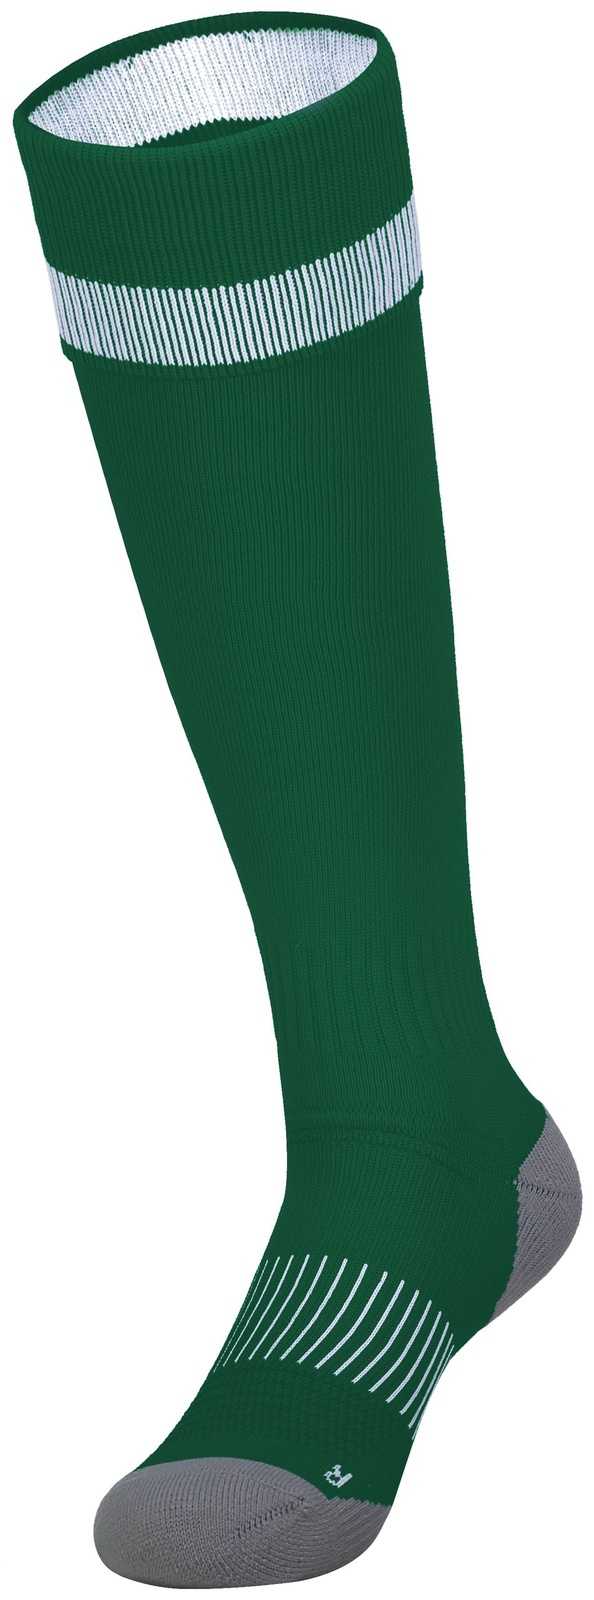 High Five 329120 Impact+ Soccer Sock - Dark Green White Graphite - HIT a Double